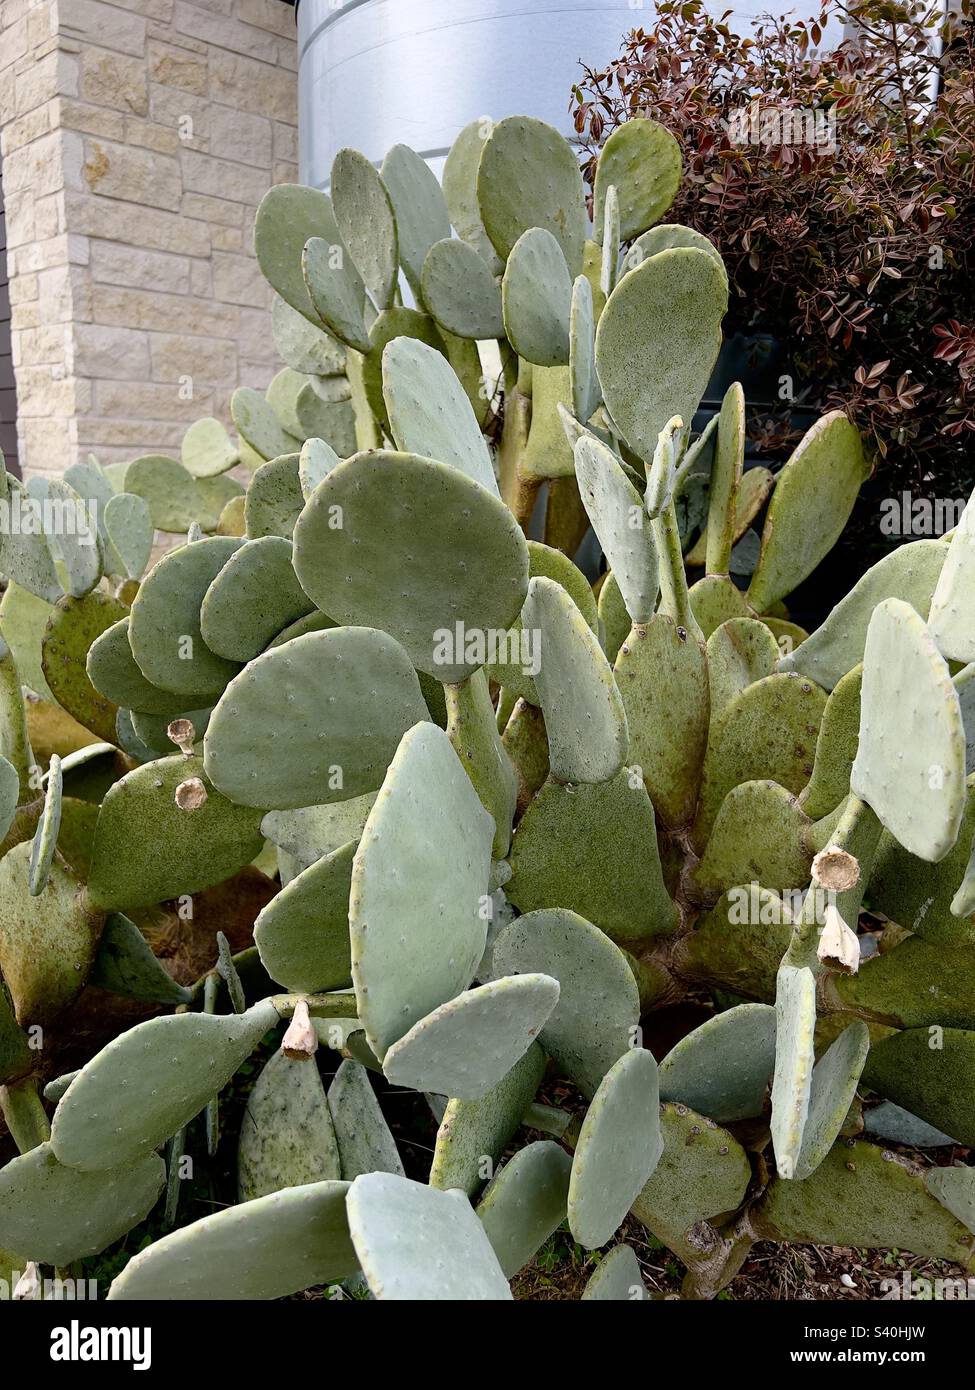 Texas cactus spineless Prickly pera un opuntia cactus famiglia paesaggio cactus cactus situato nel parco statale di Madre Neff in Texas Foto Stock